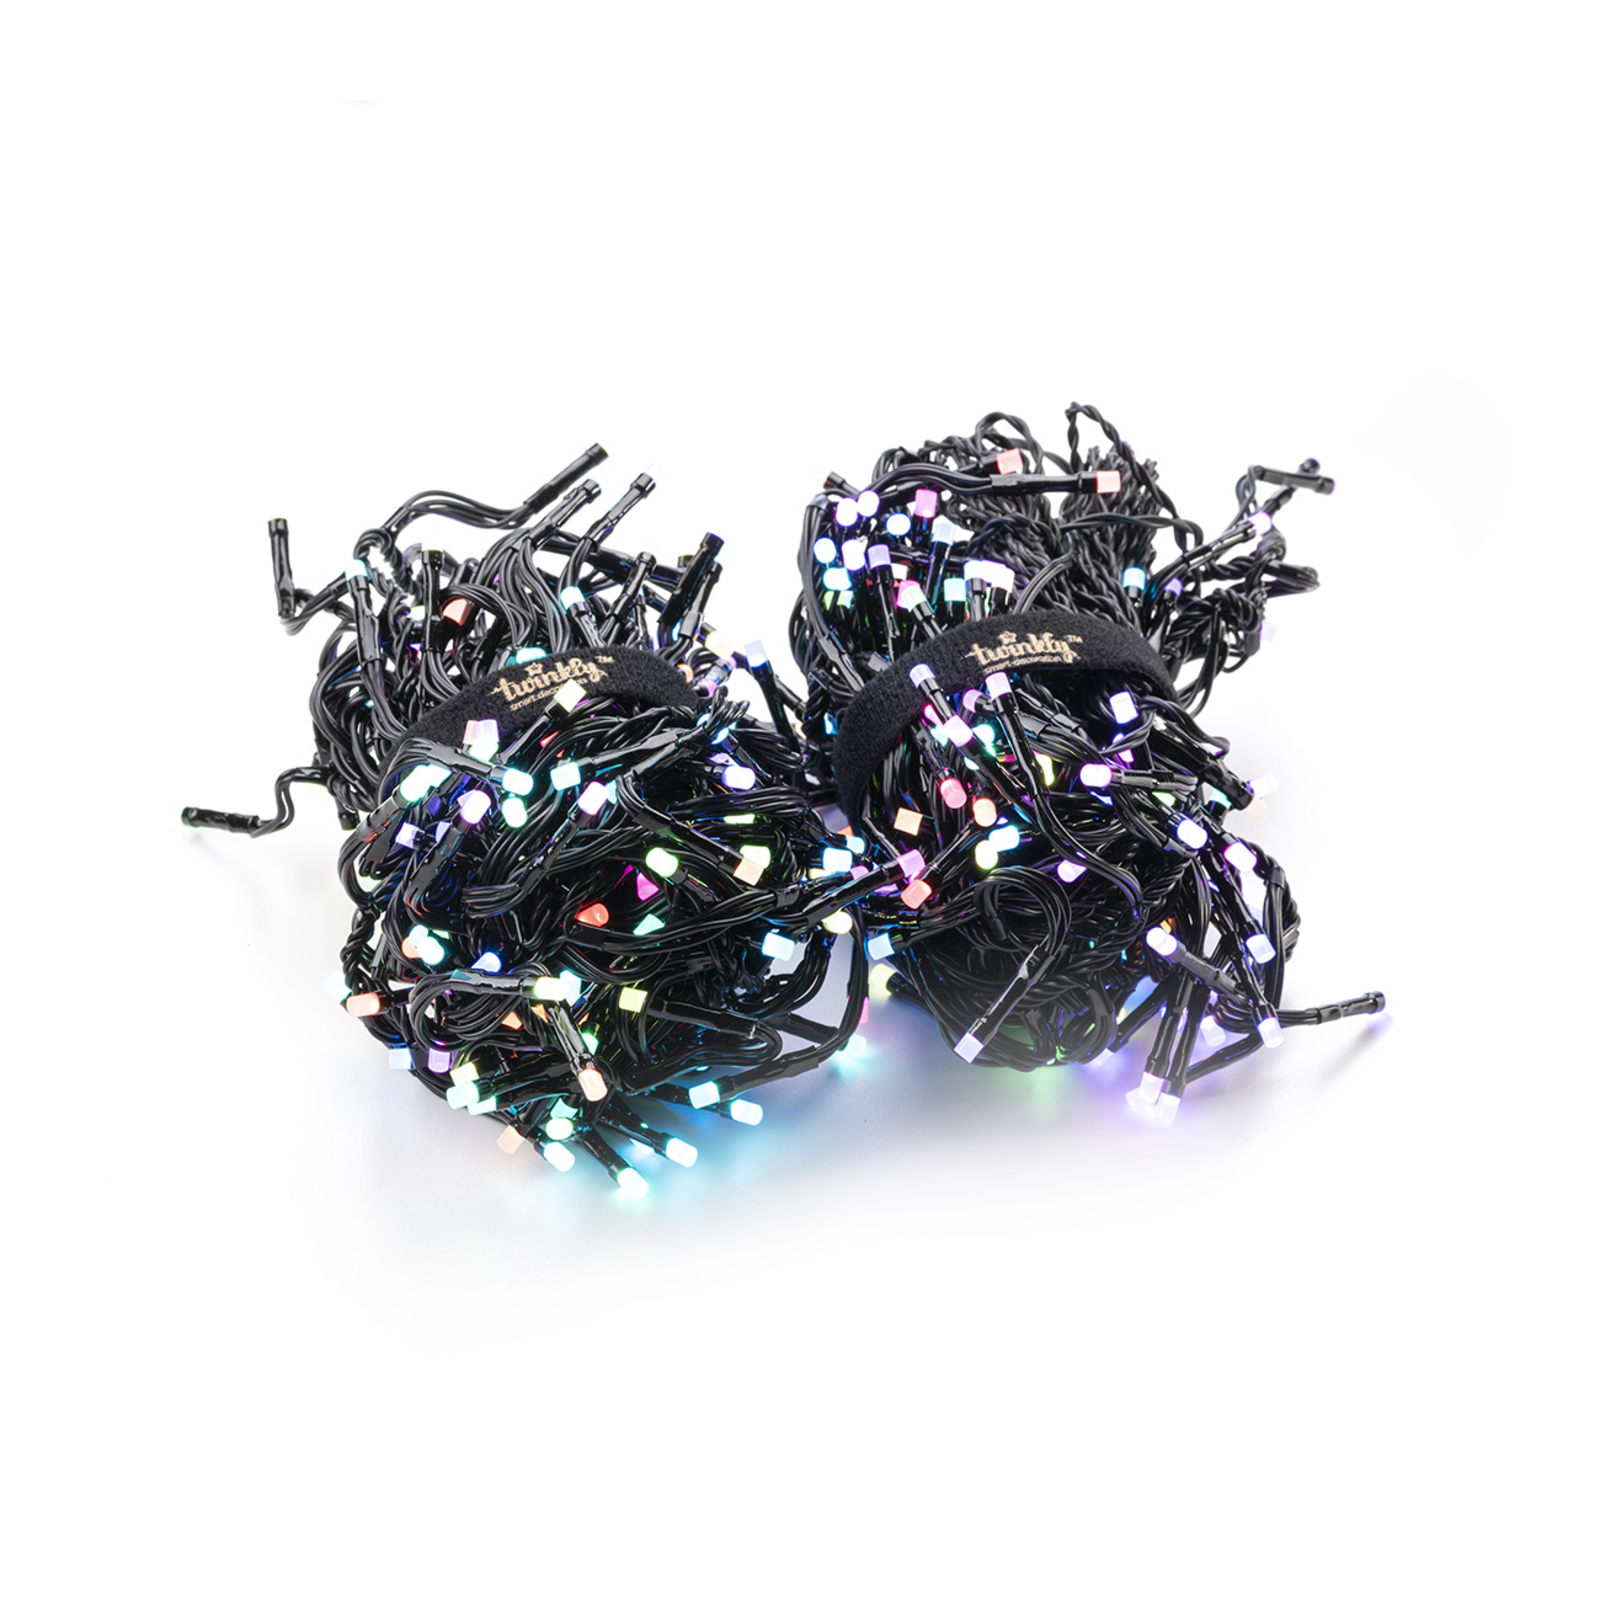 Reťaz Twinkly RGB cluster, čierna, 400 svetiel 6 m